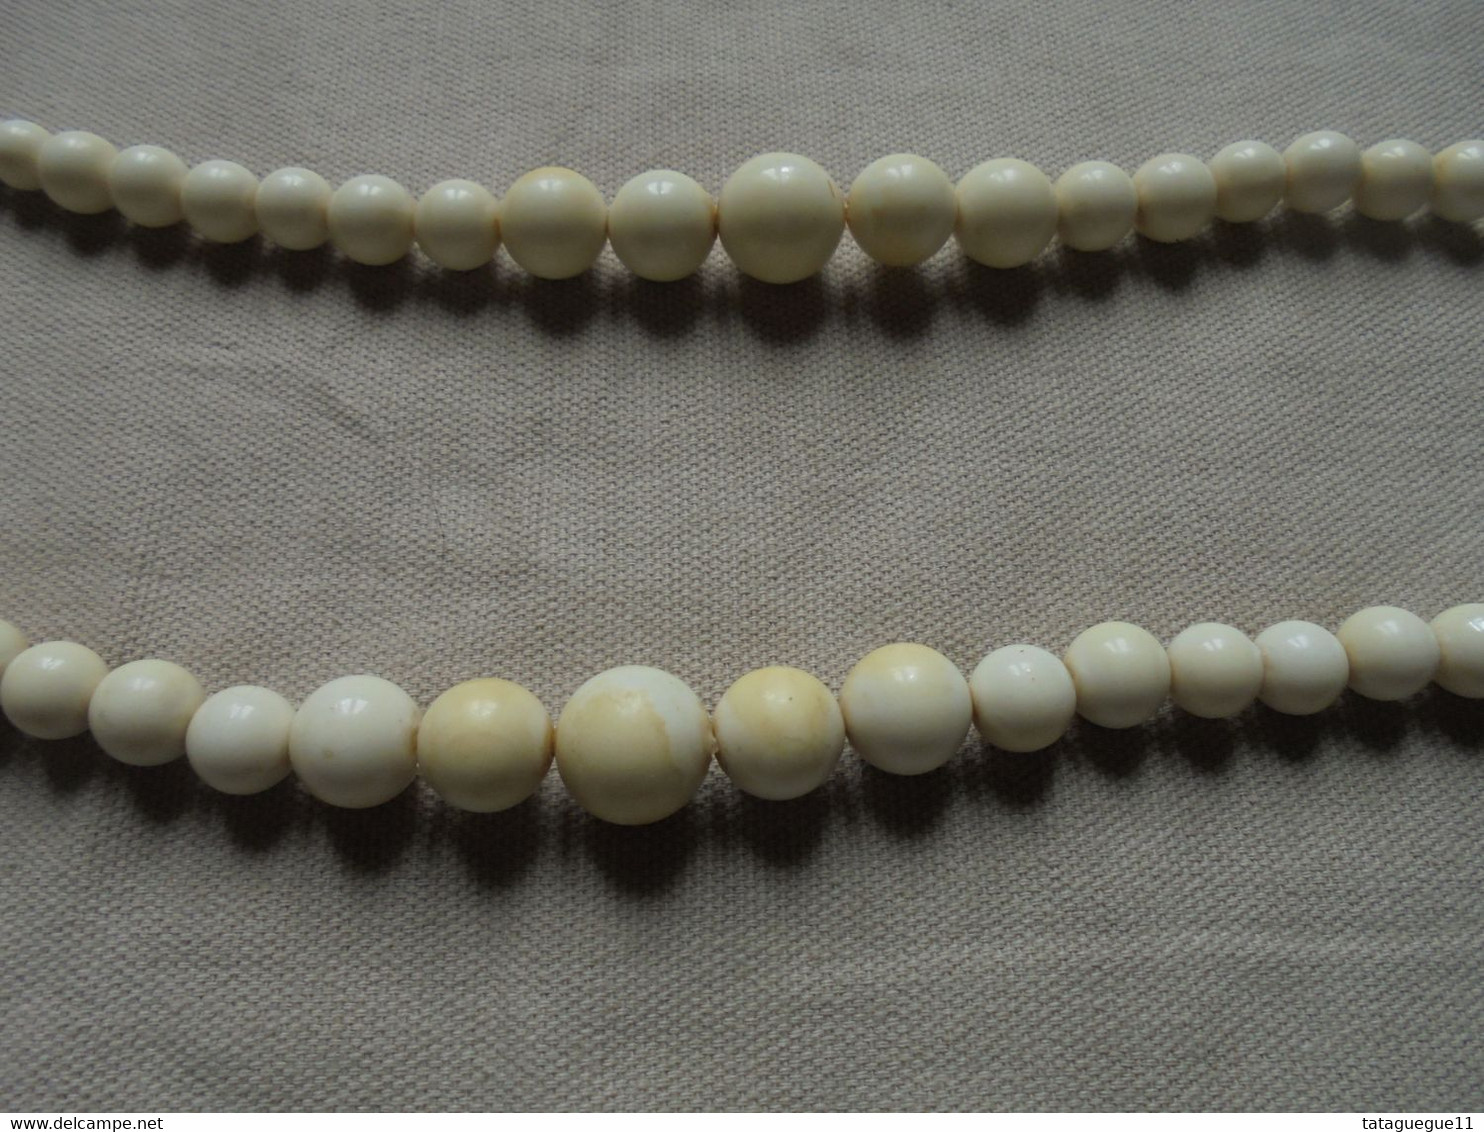 Vintage - Bijou fantaisie - Collier 2 rangs de perles (plastique)